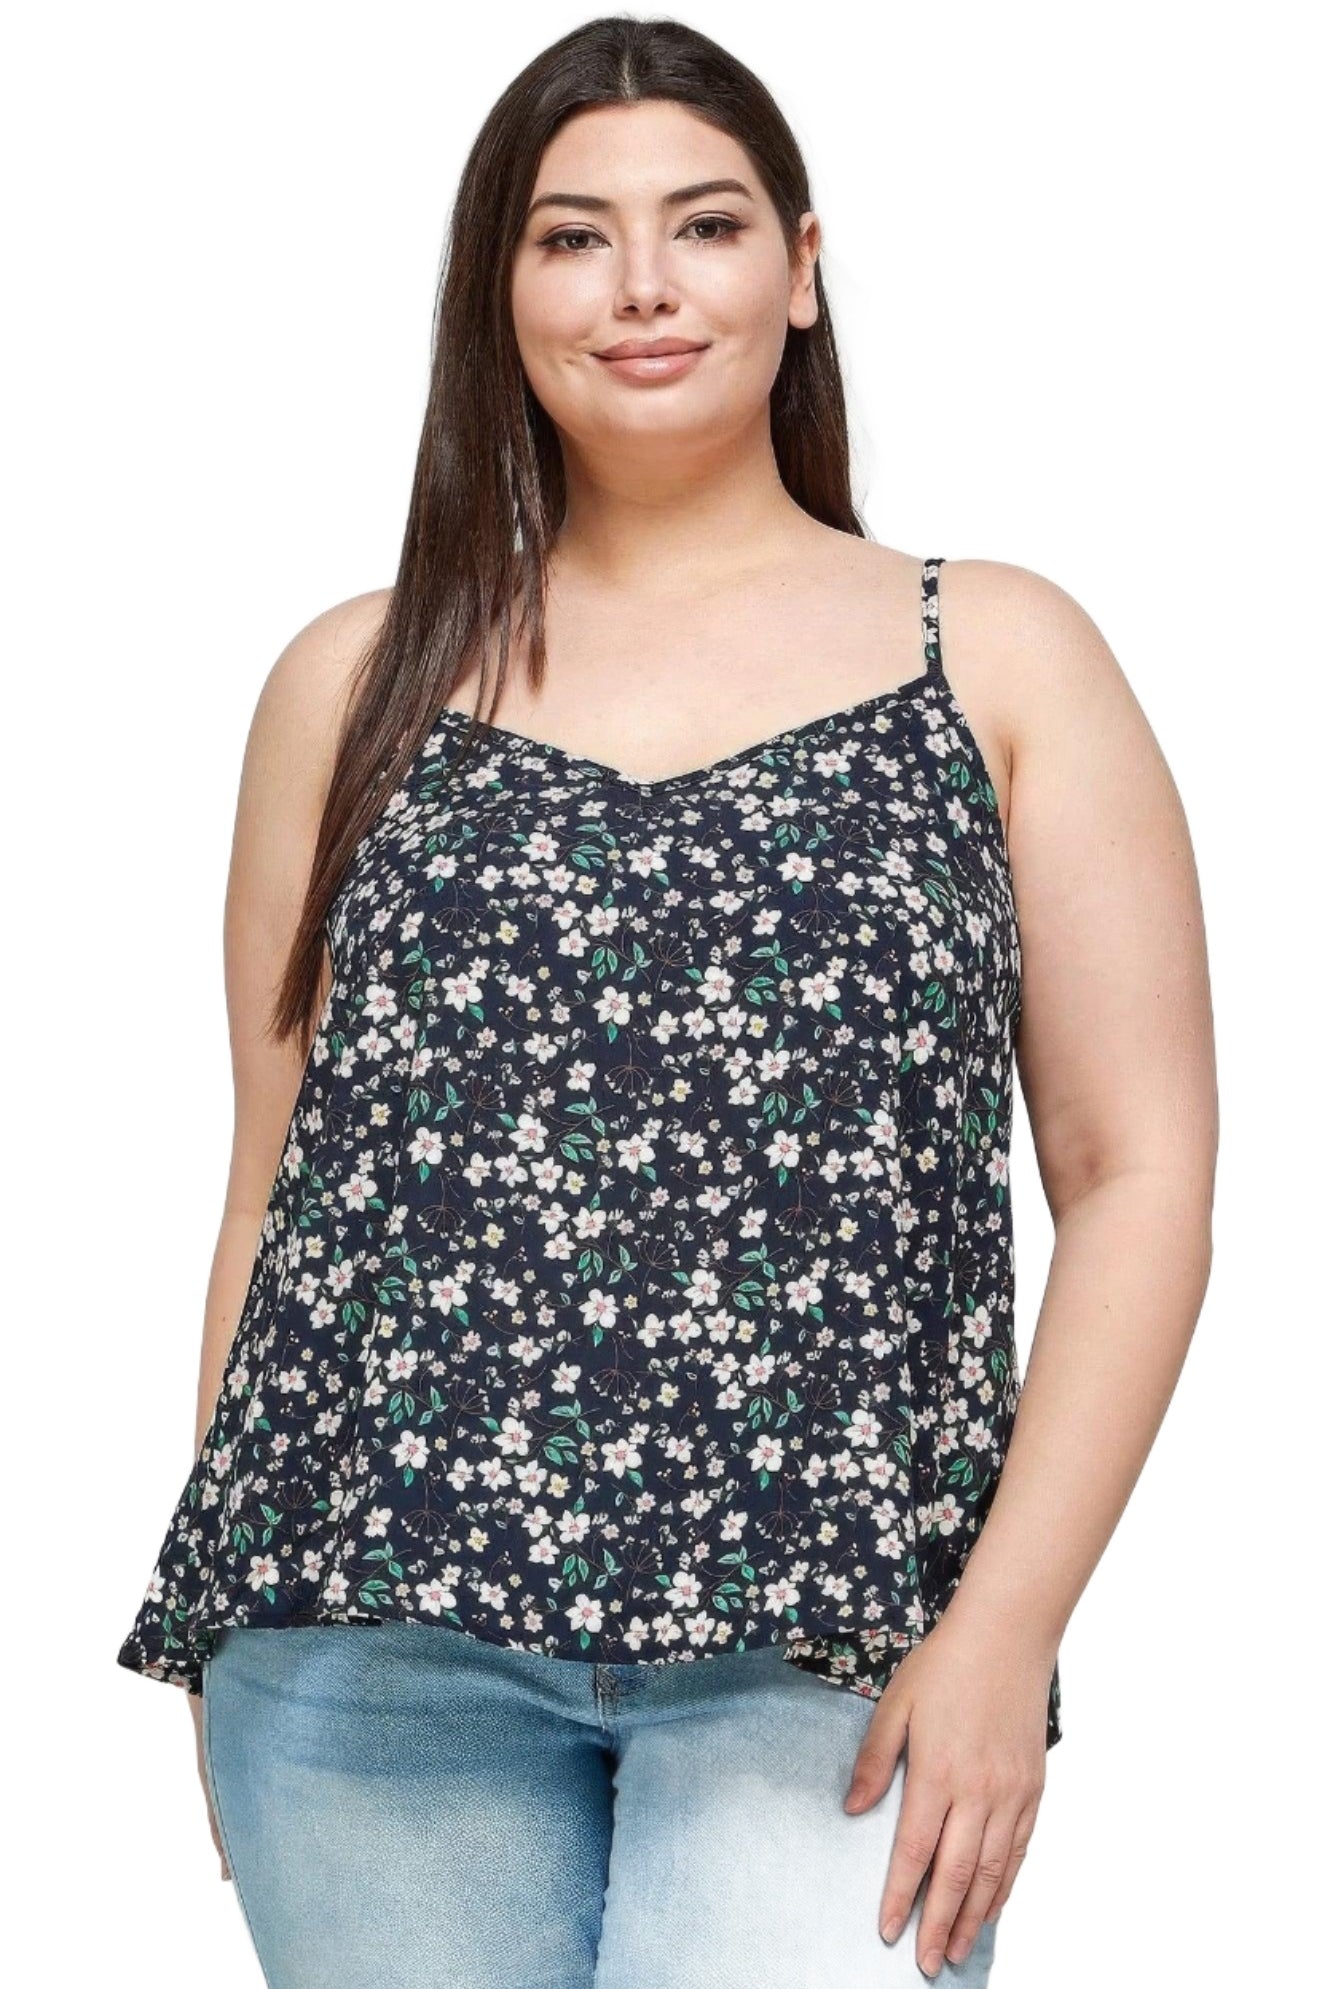 Women's Shirts Plus Size, Ditsy Floral Print Cami Top